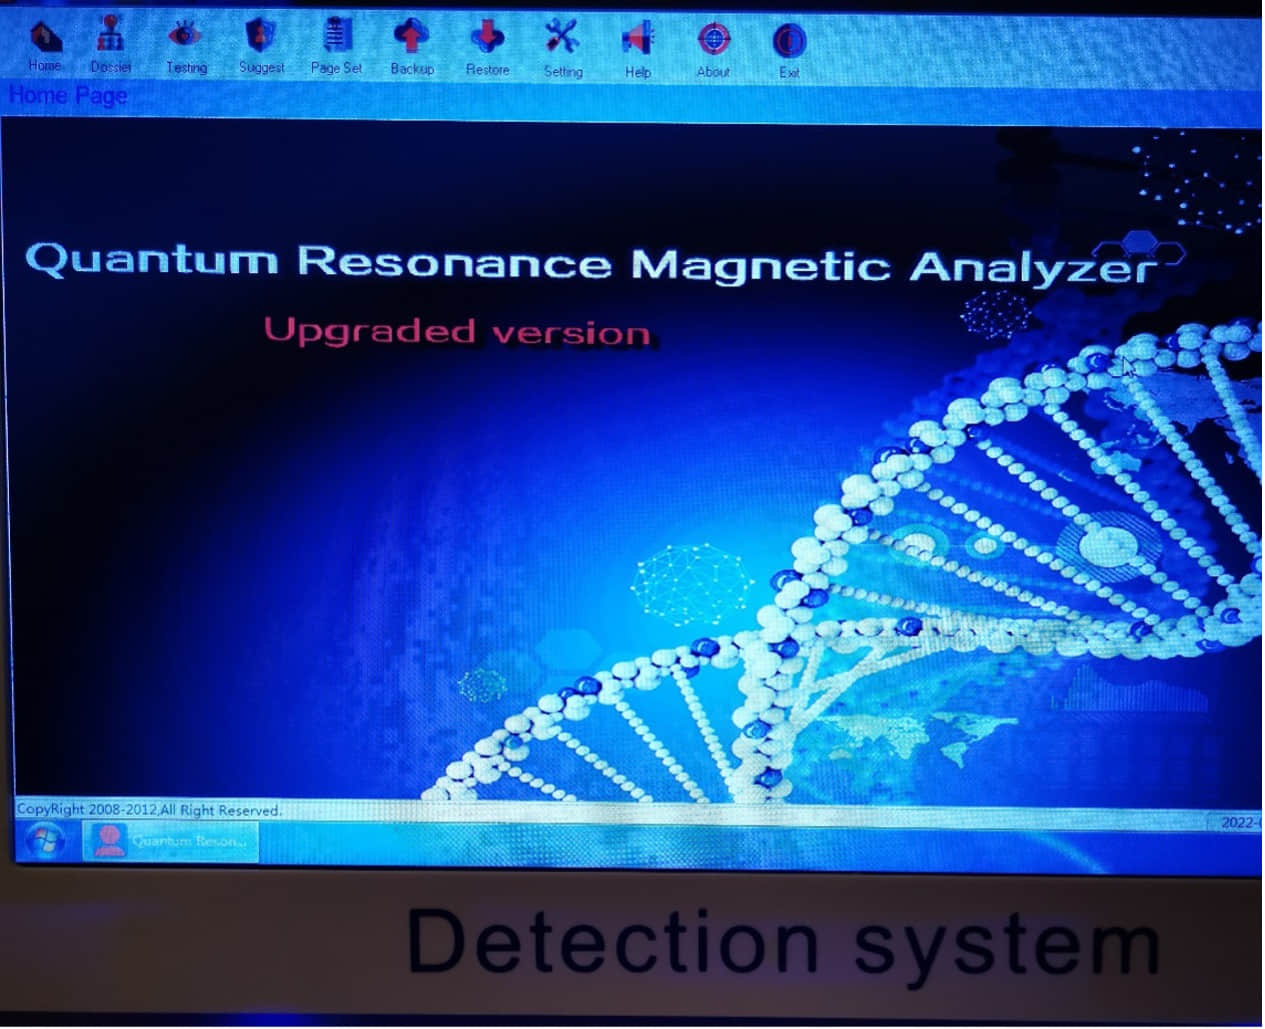 Auantum Resonance Magnetic Analyzer